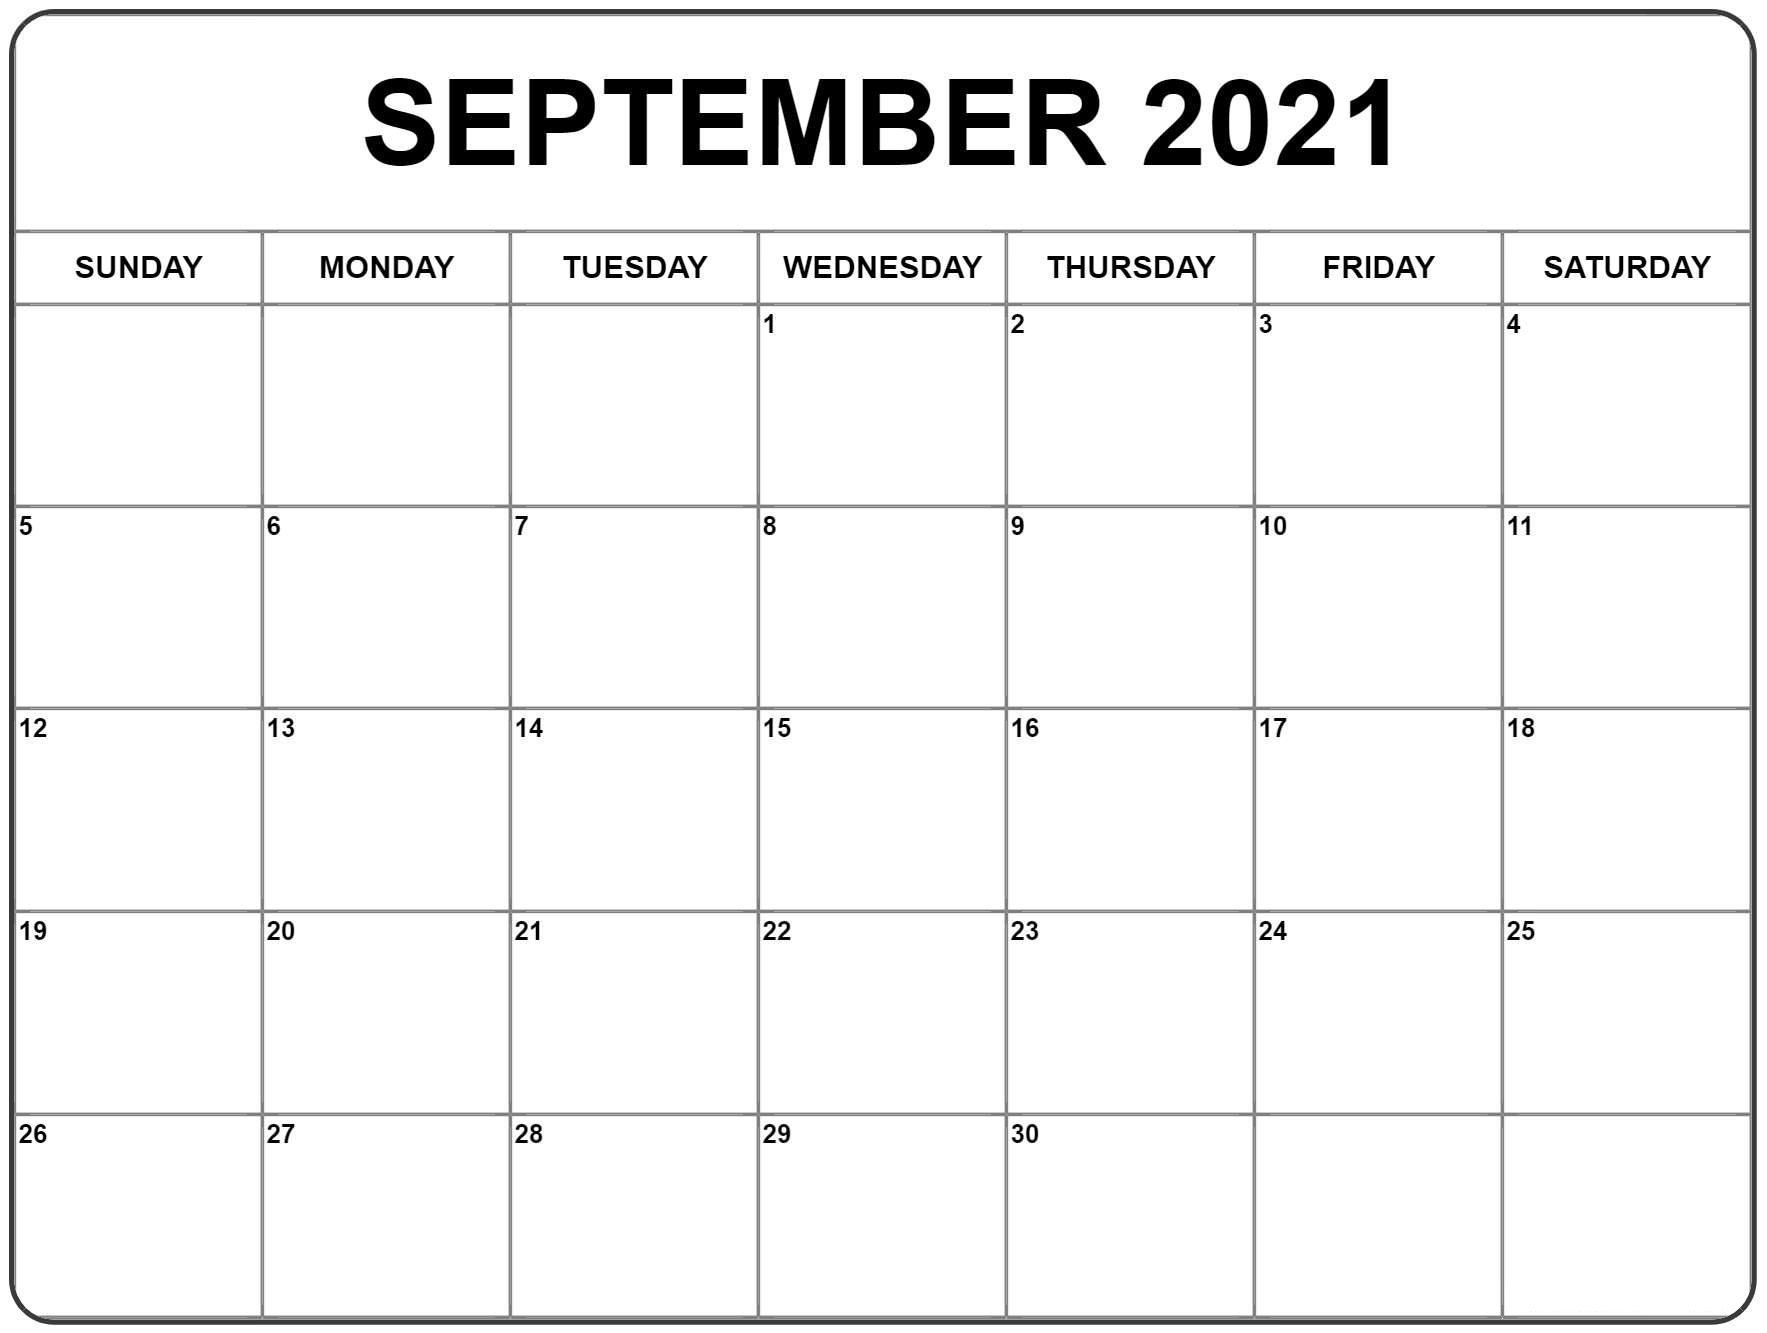 September 2021 Calendar. Calendar printables, Blank monthly calendar, September calendar